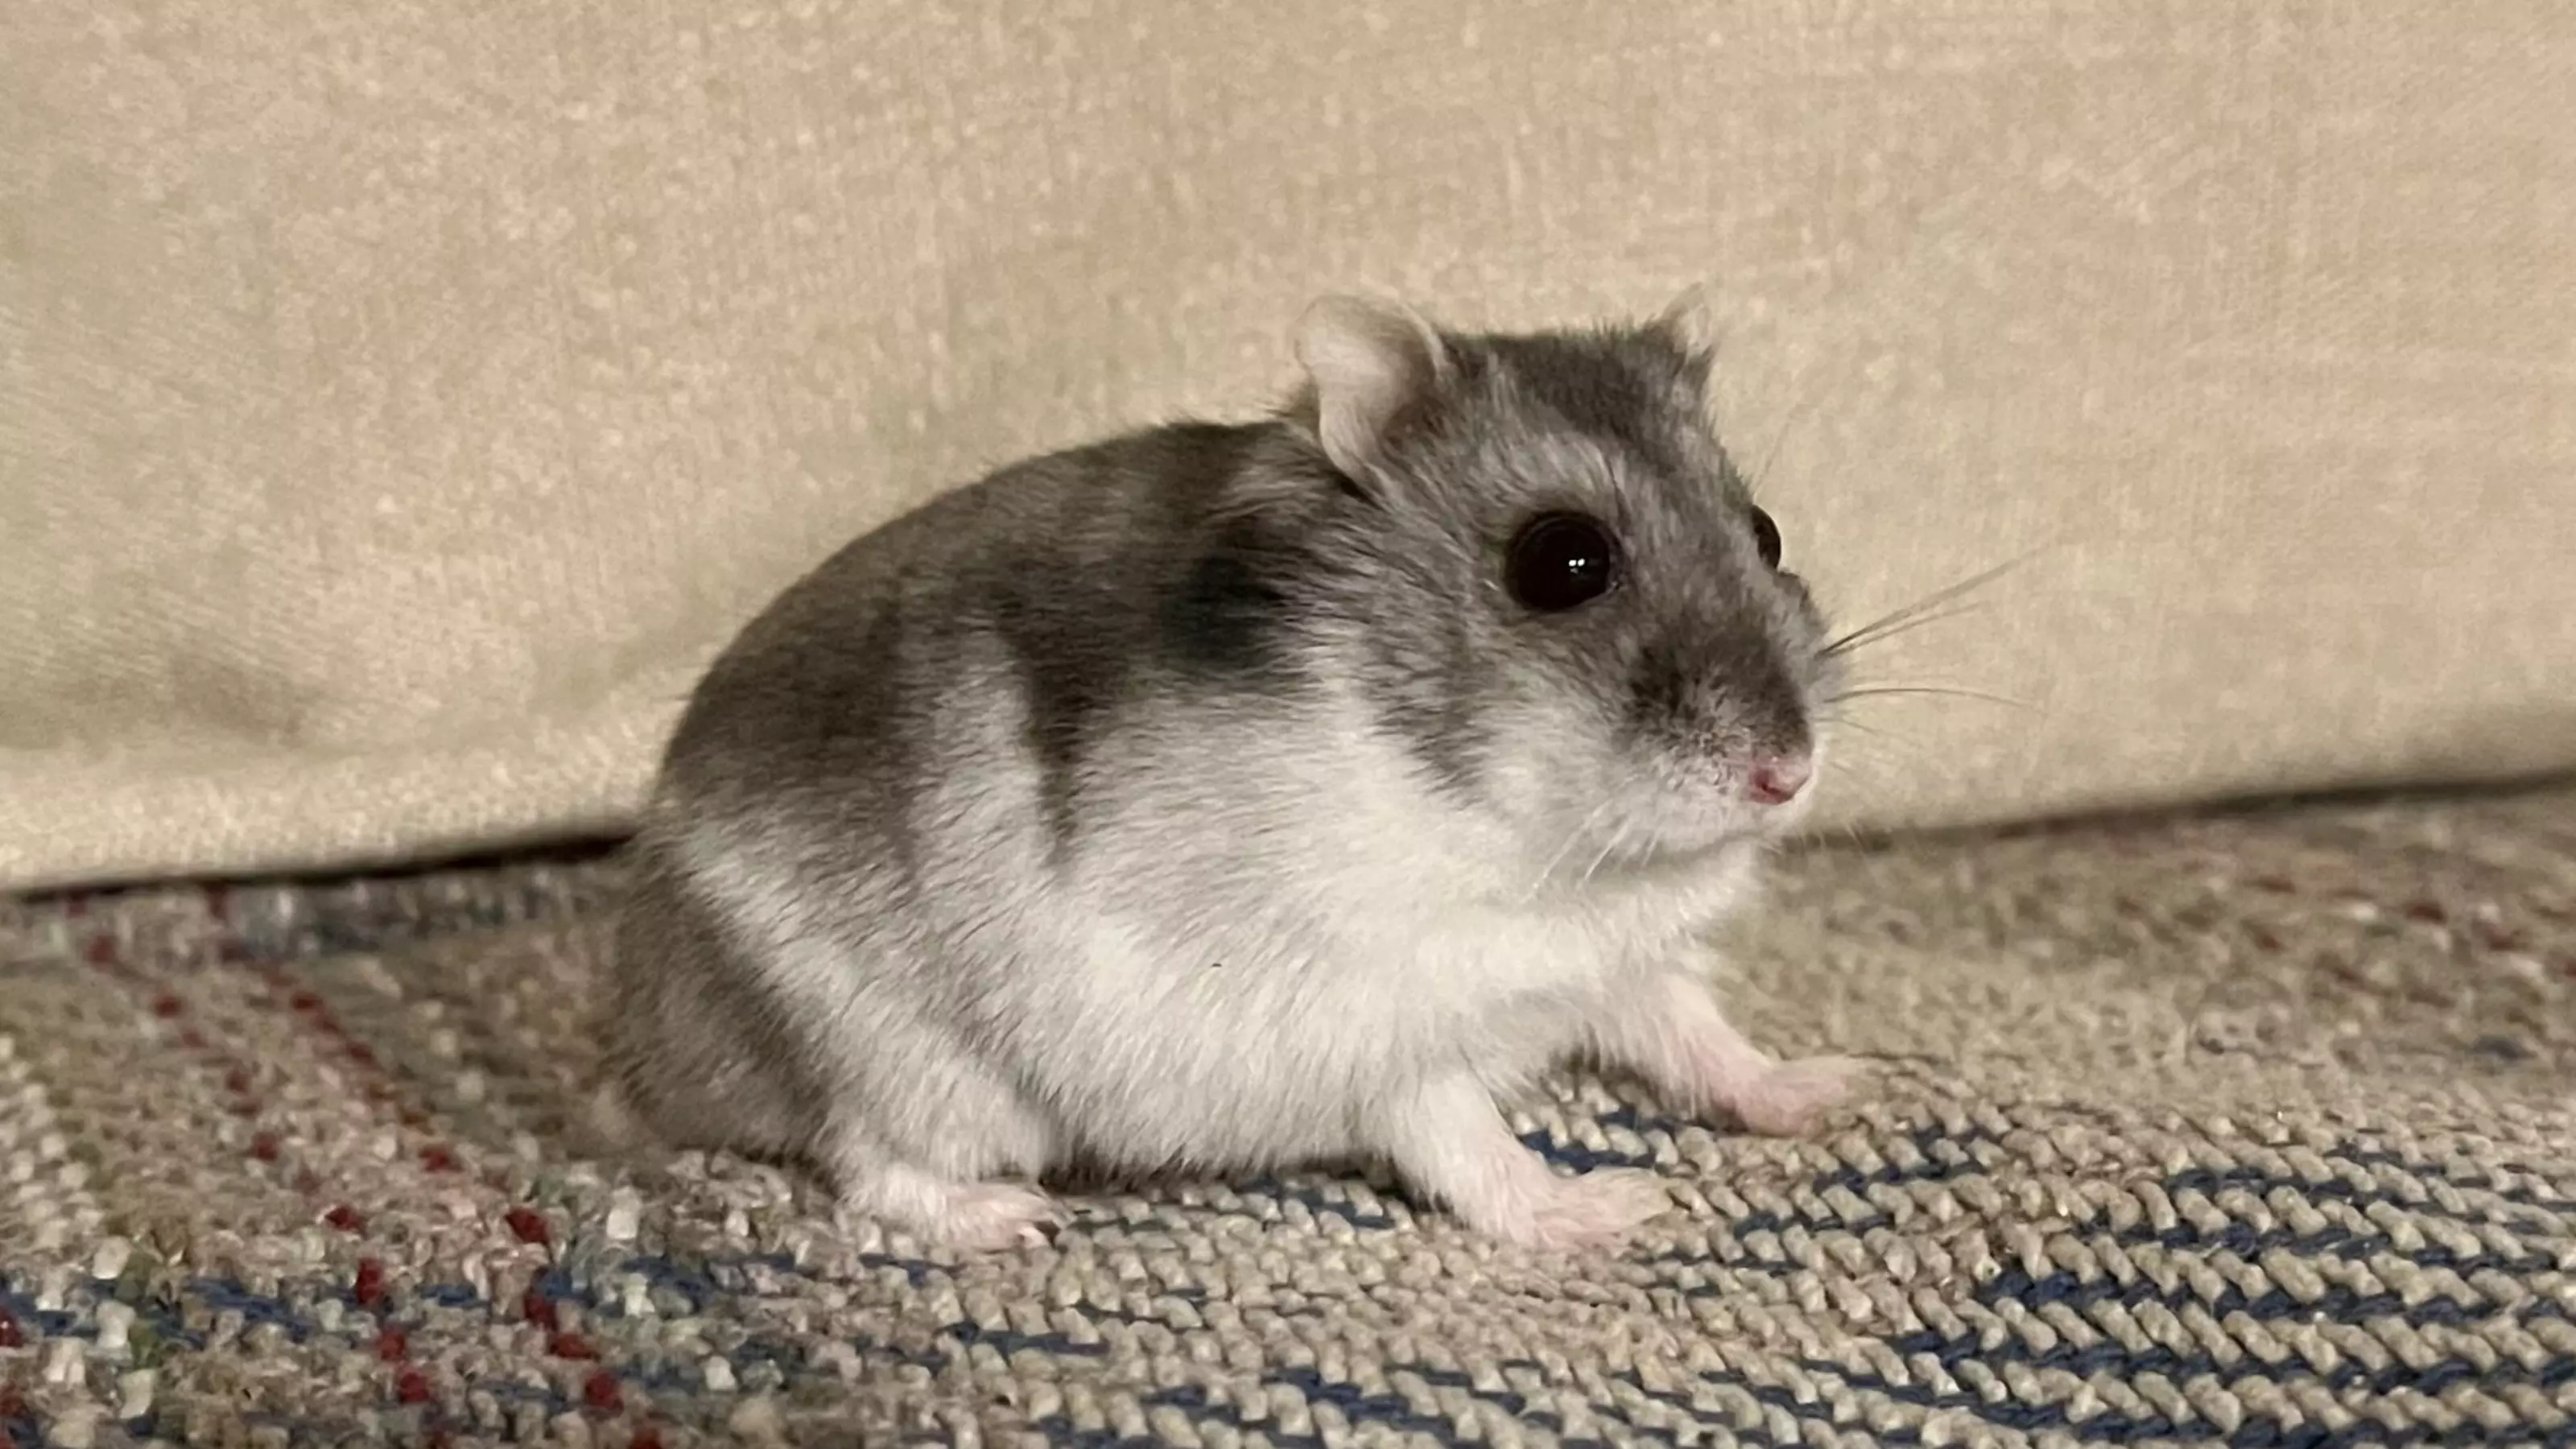 Hamster Roxy sat on a sofa